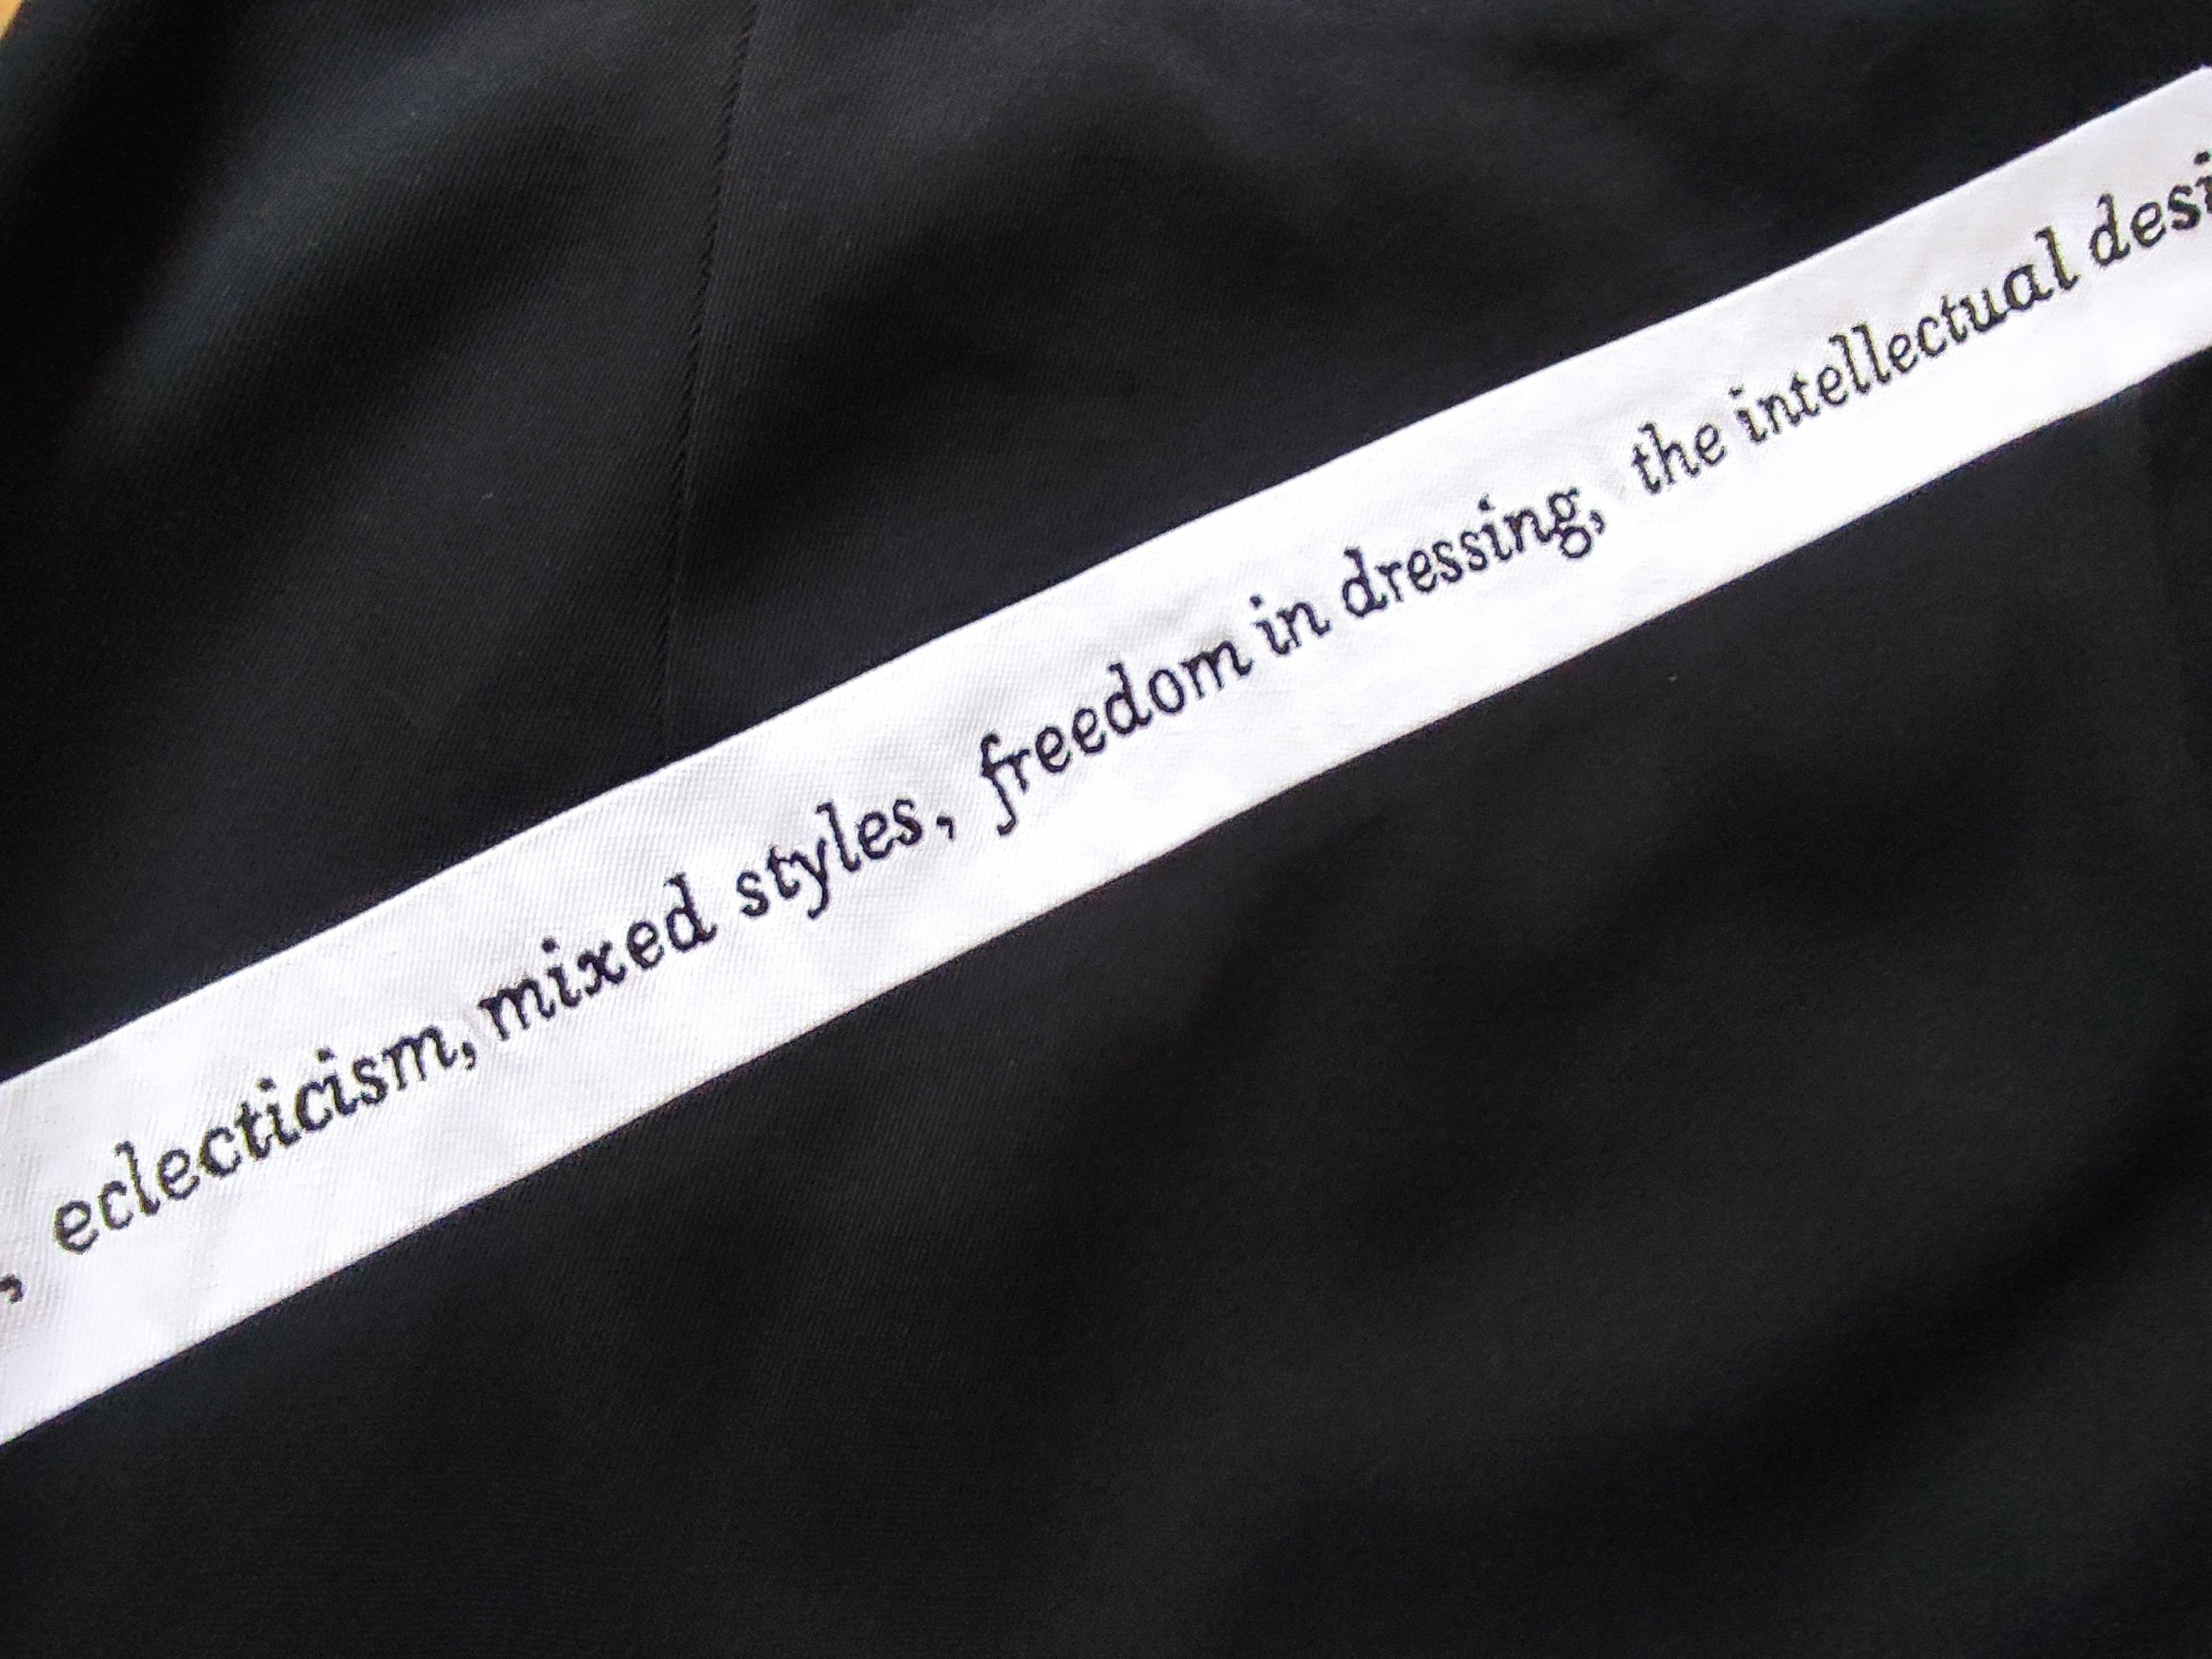 Moschino Cheap and Chic Irony Text Tape Vintage Couture Schwarz-Weißes Kleid Anzug im Angebot 15